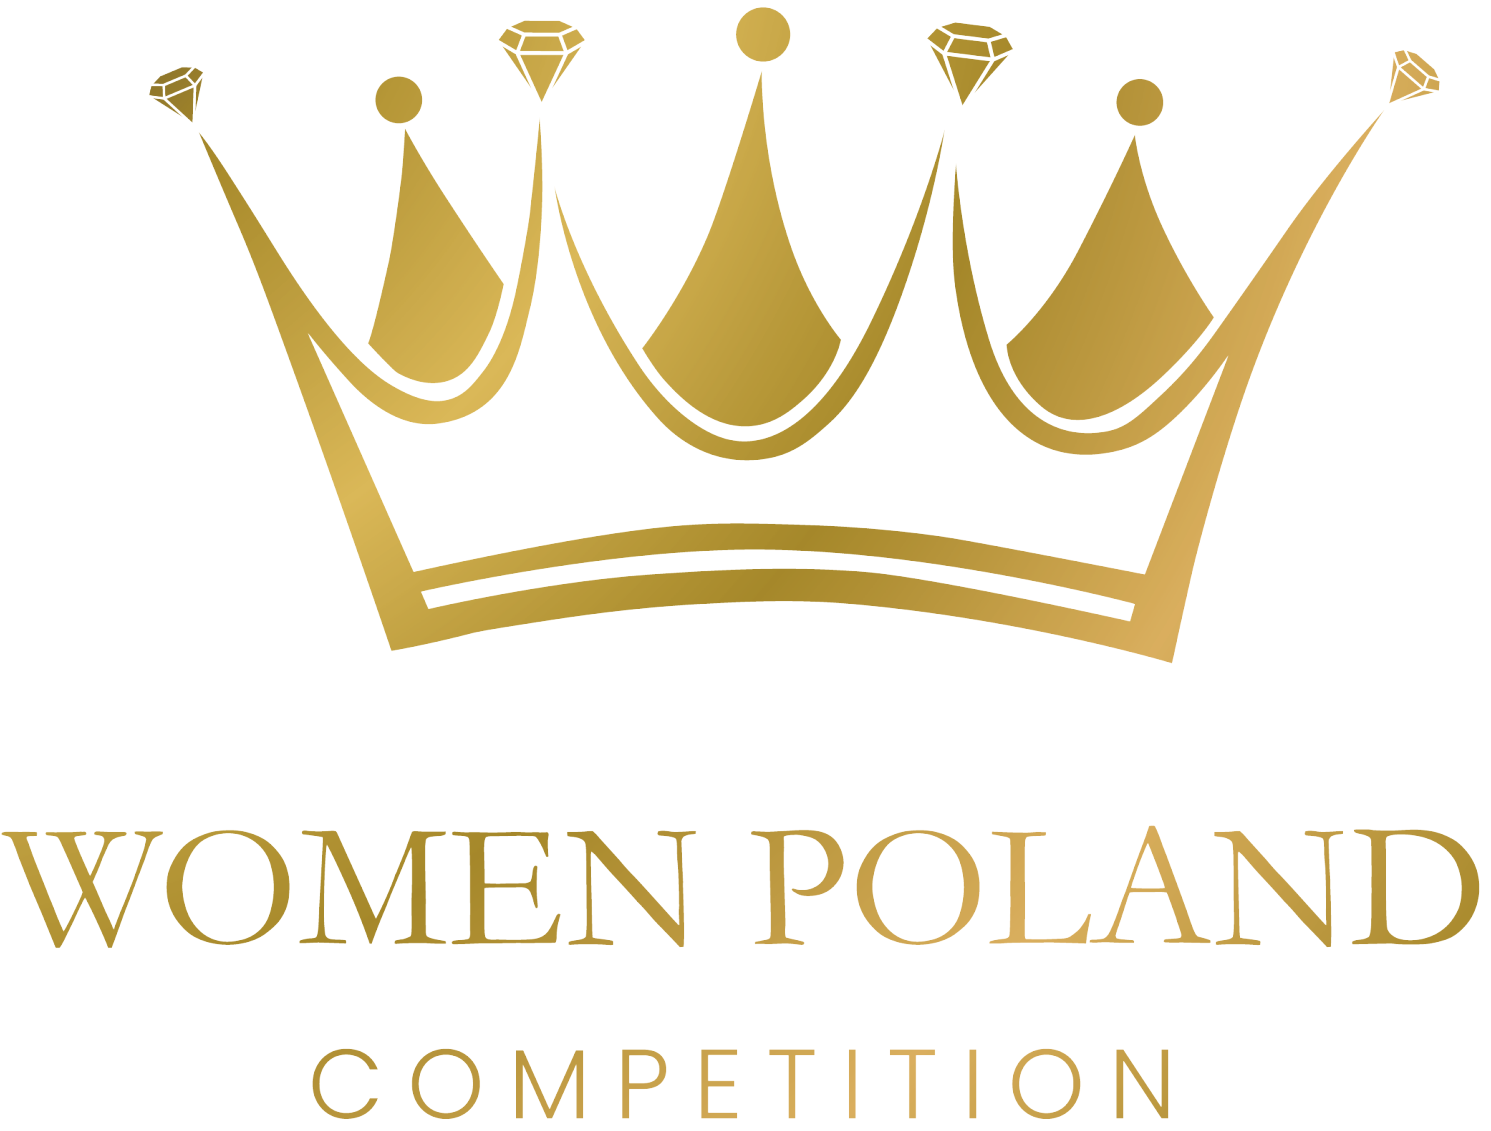 WOMEN POLAND COMPETITION